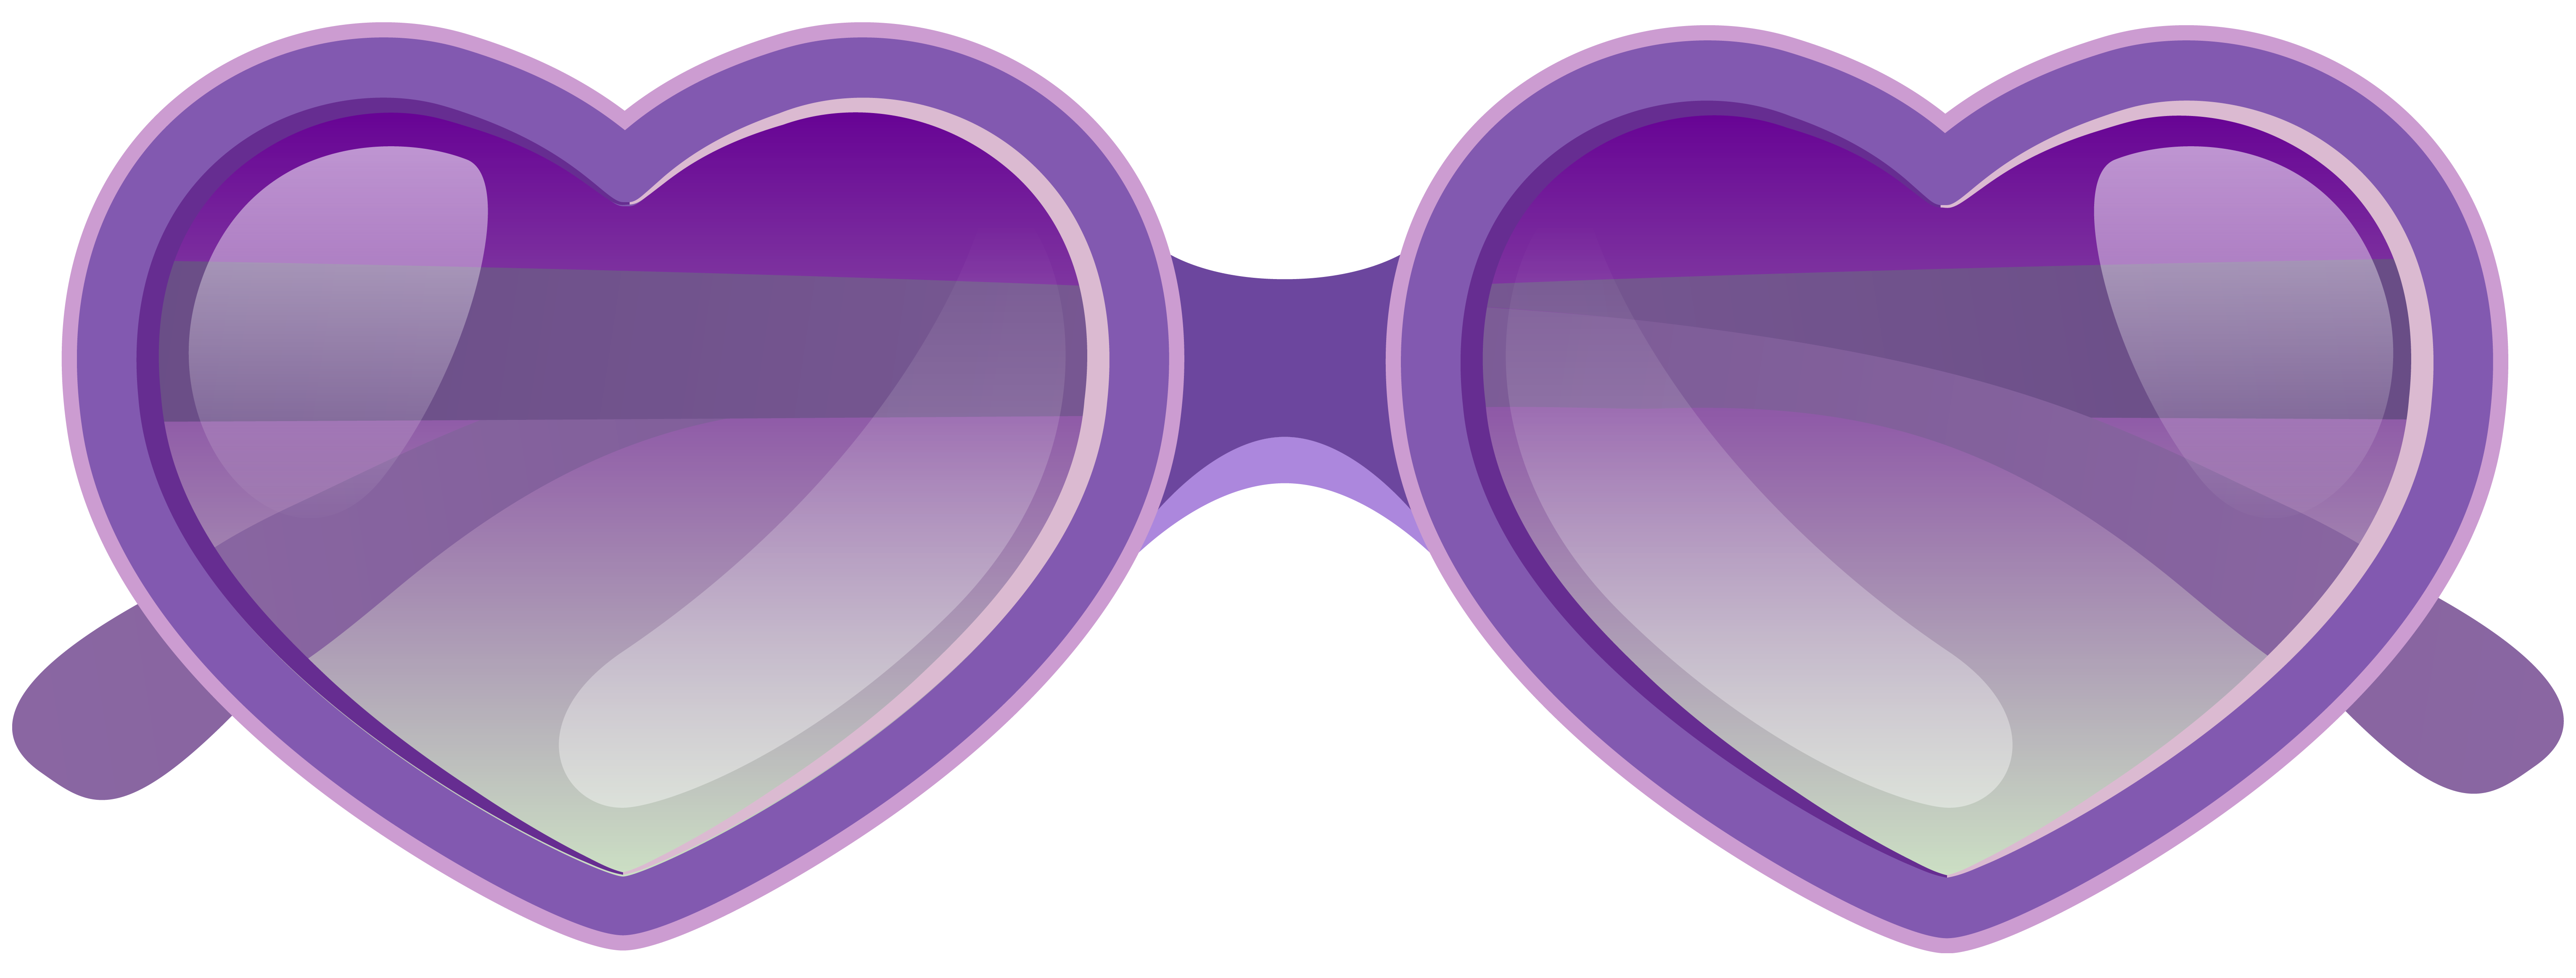 Heart sunglasses png image. 4 clipart purple